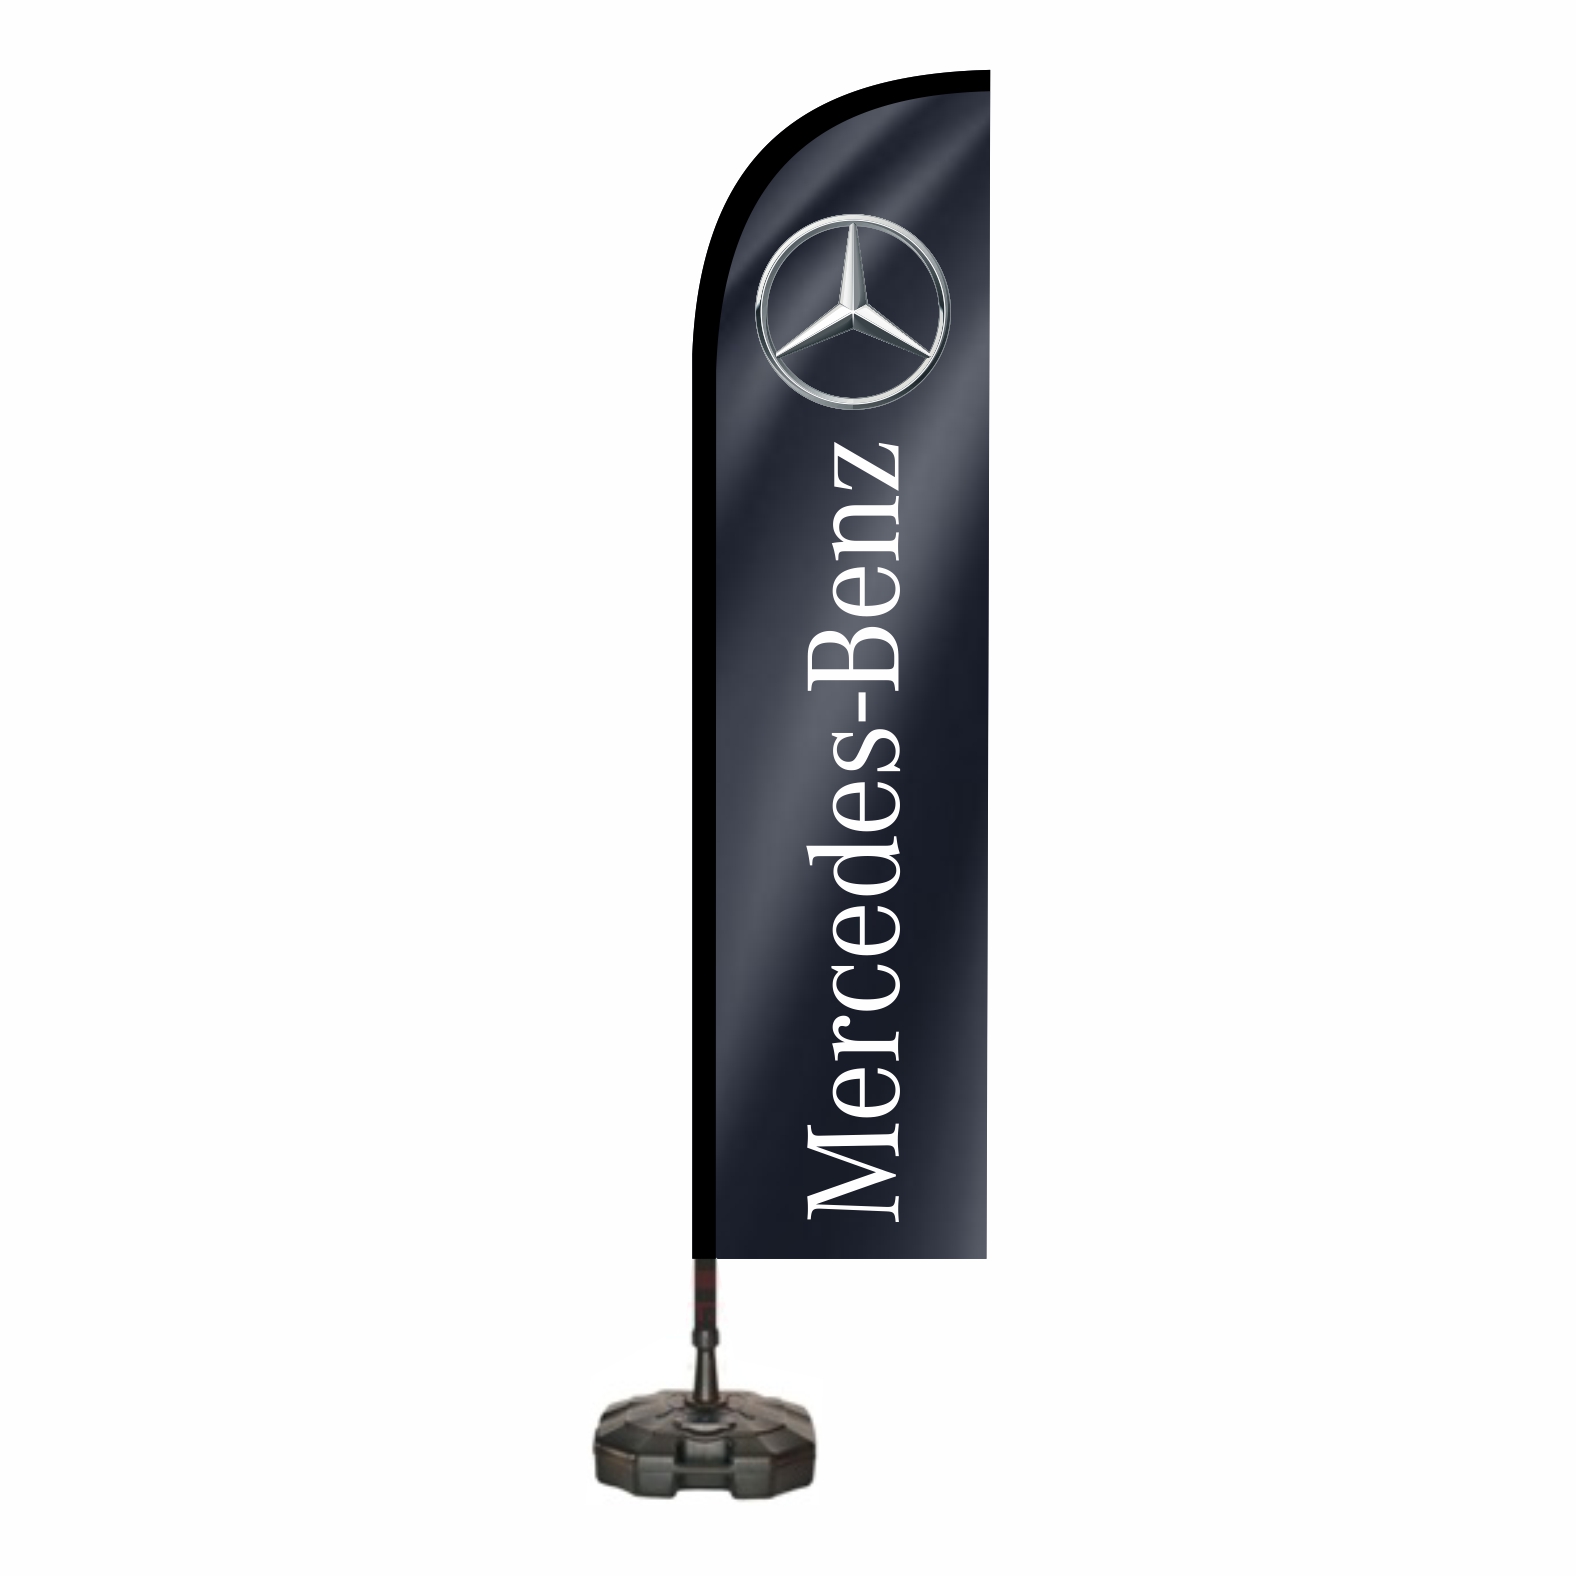 Mercedes Benz Yelken Bayraklar Nerede Yaptrlr